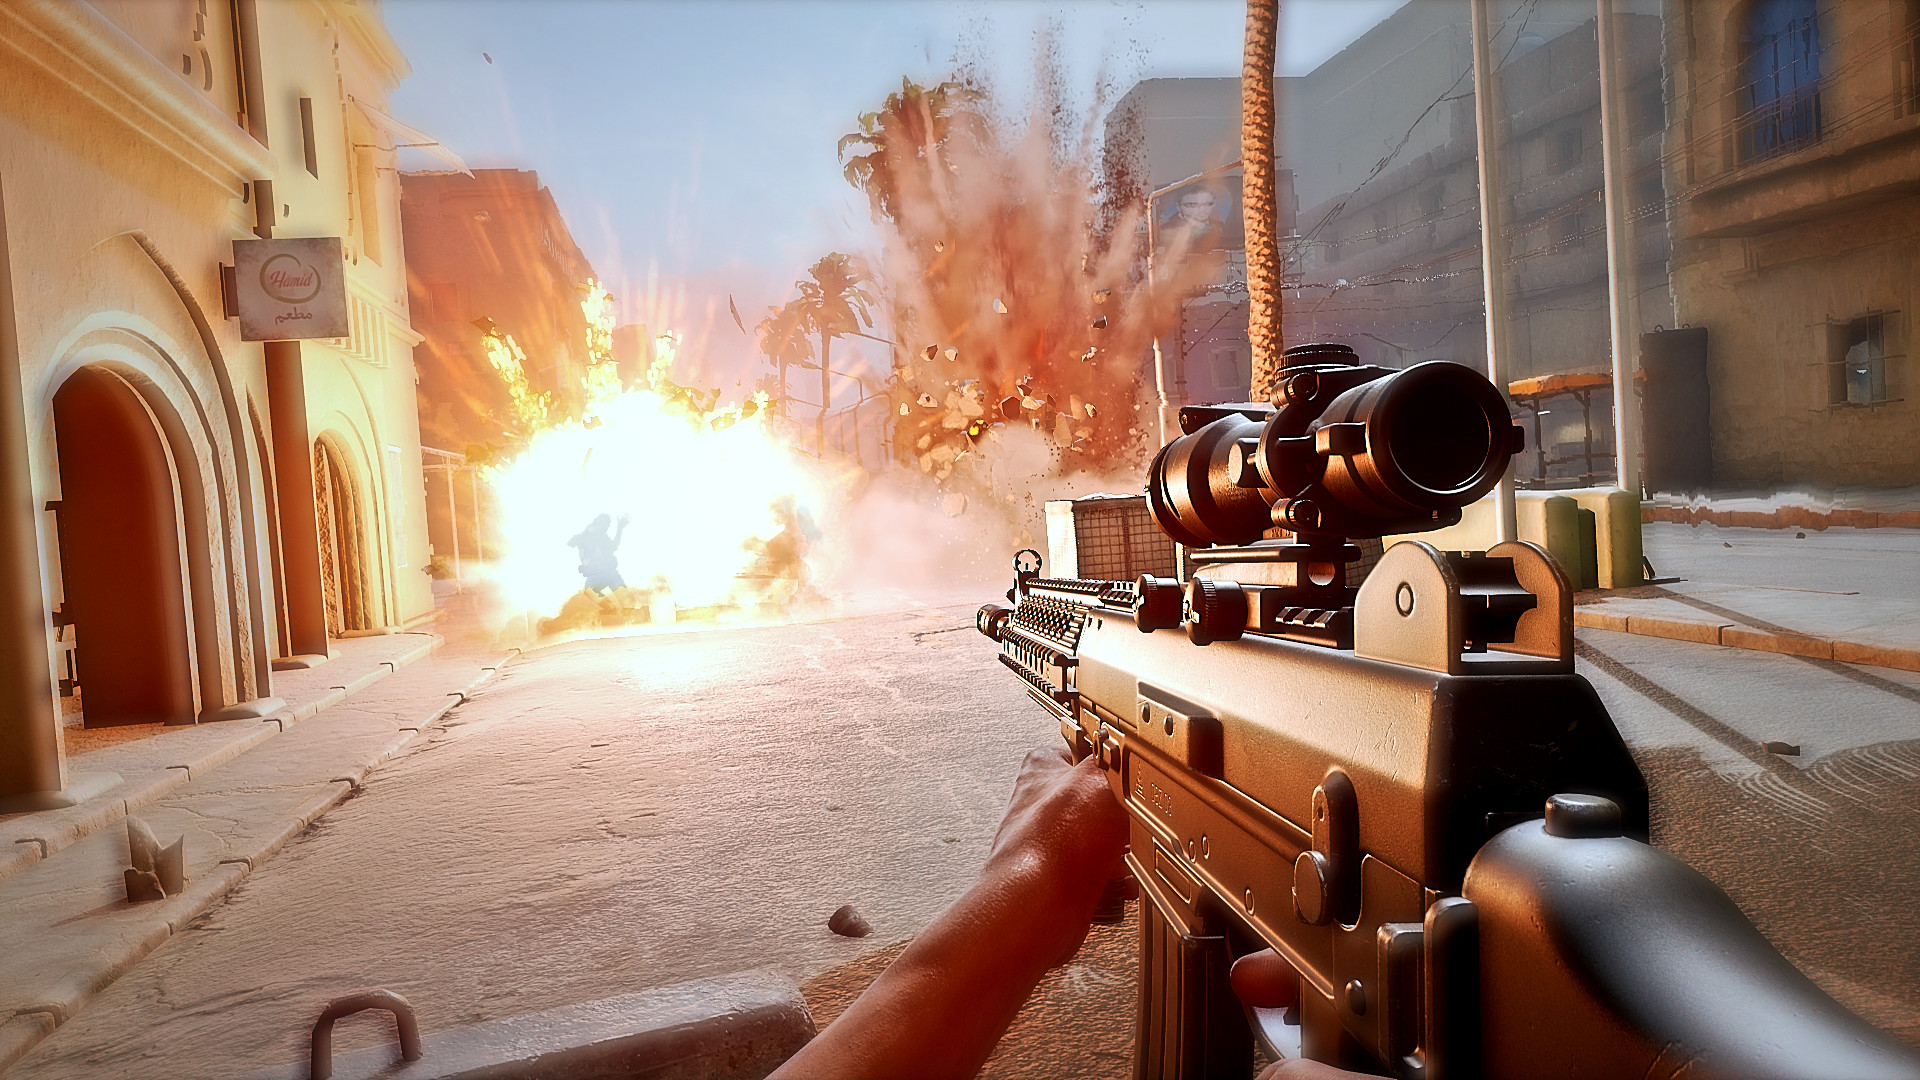 Хардкорный онлайн-боевик Insurgency: Sandstorm заглянет на PS4 и Xbox One 25 августа